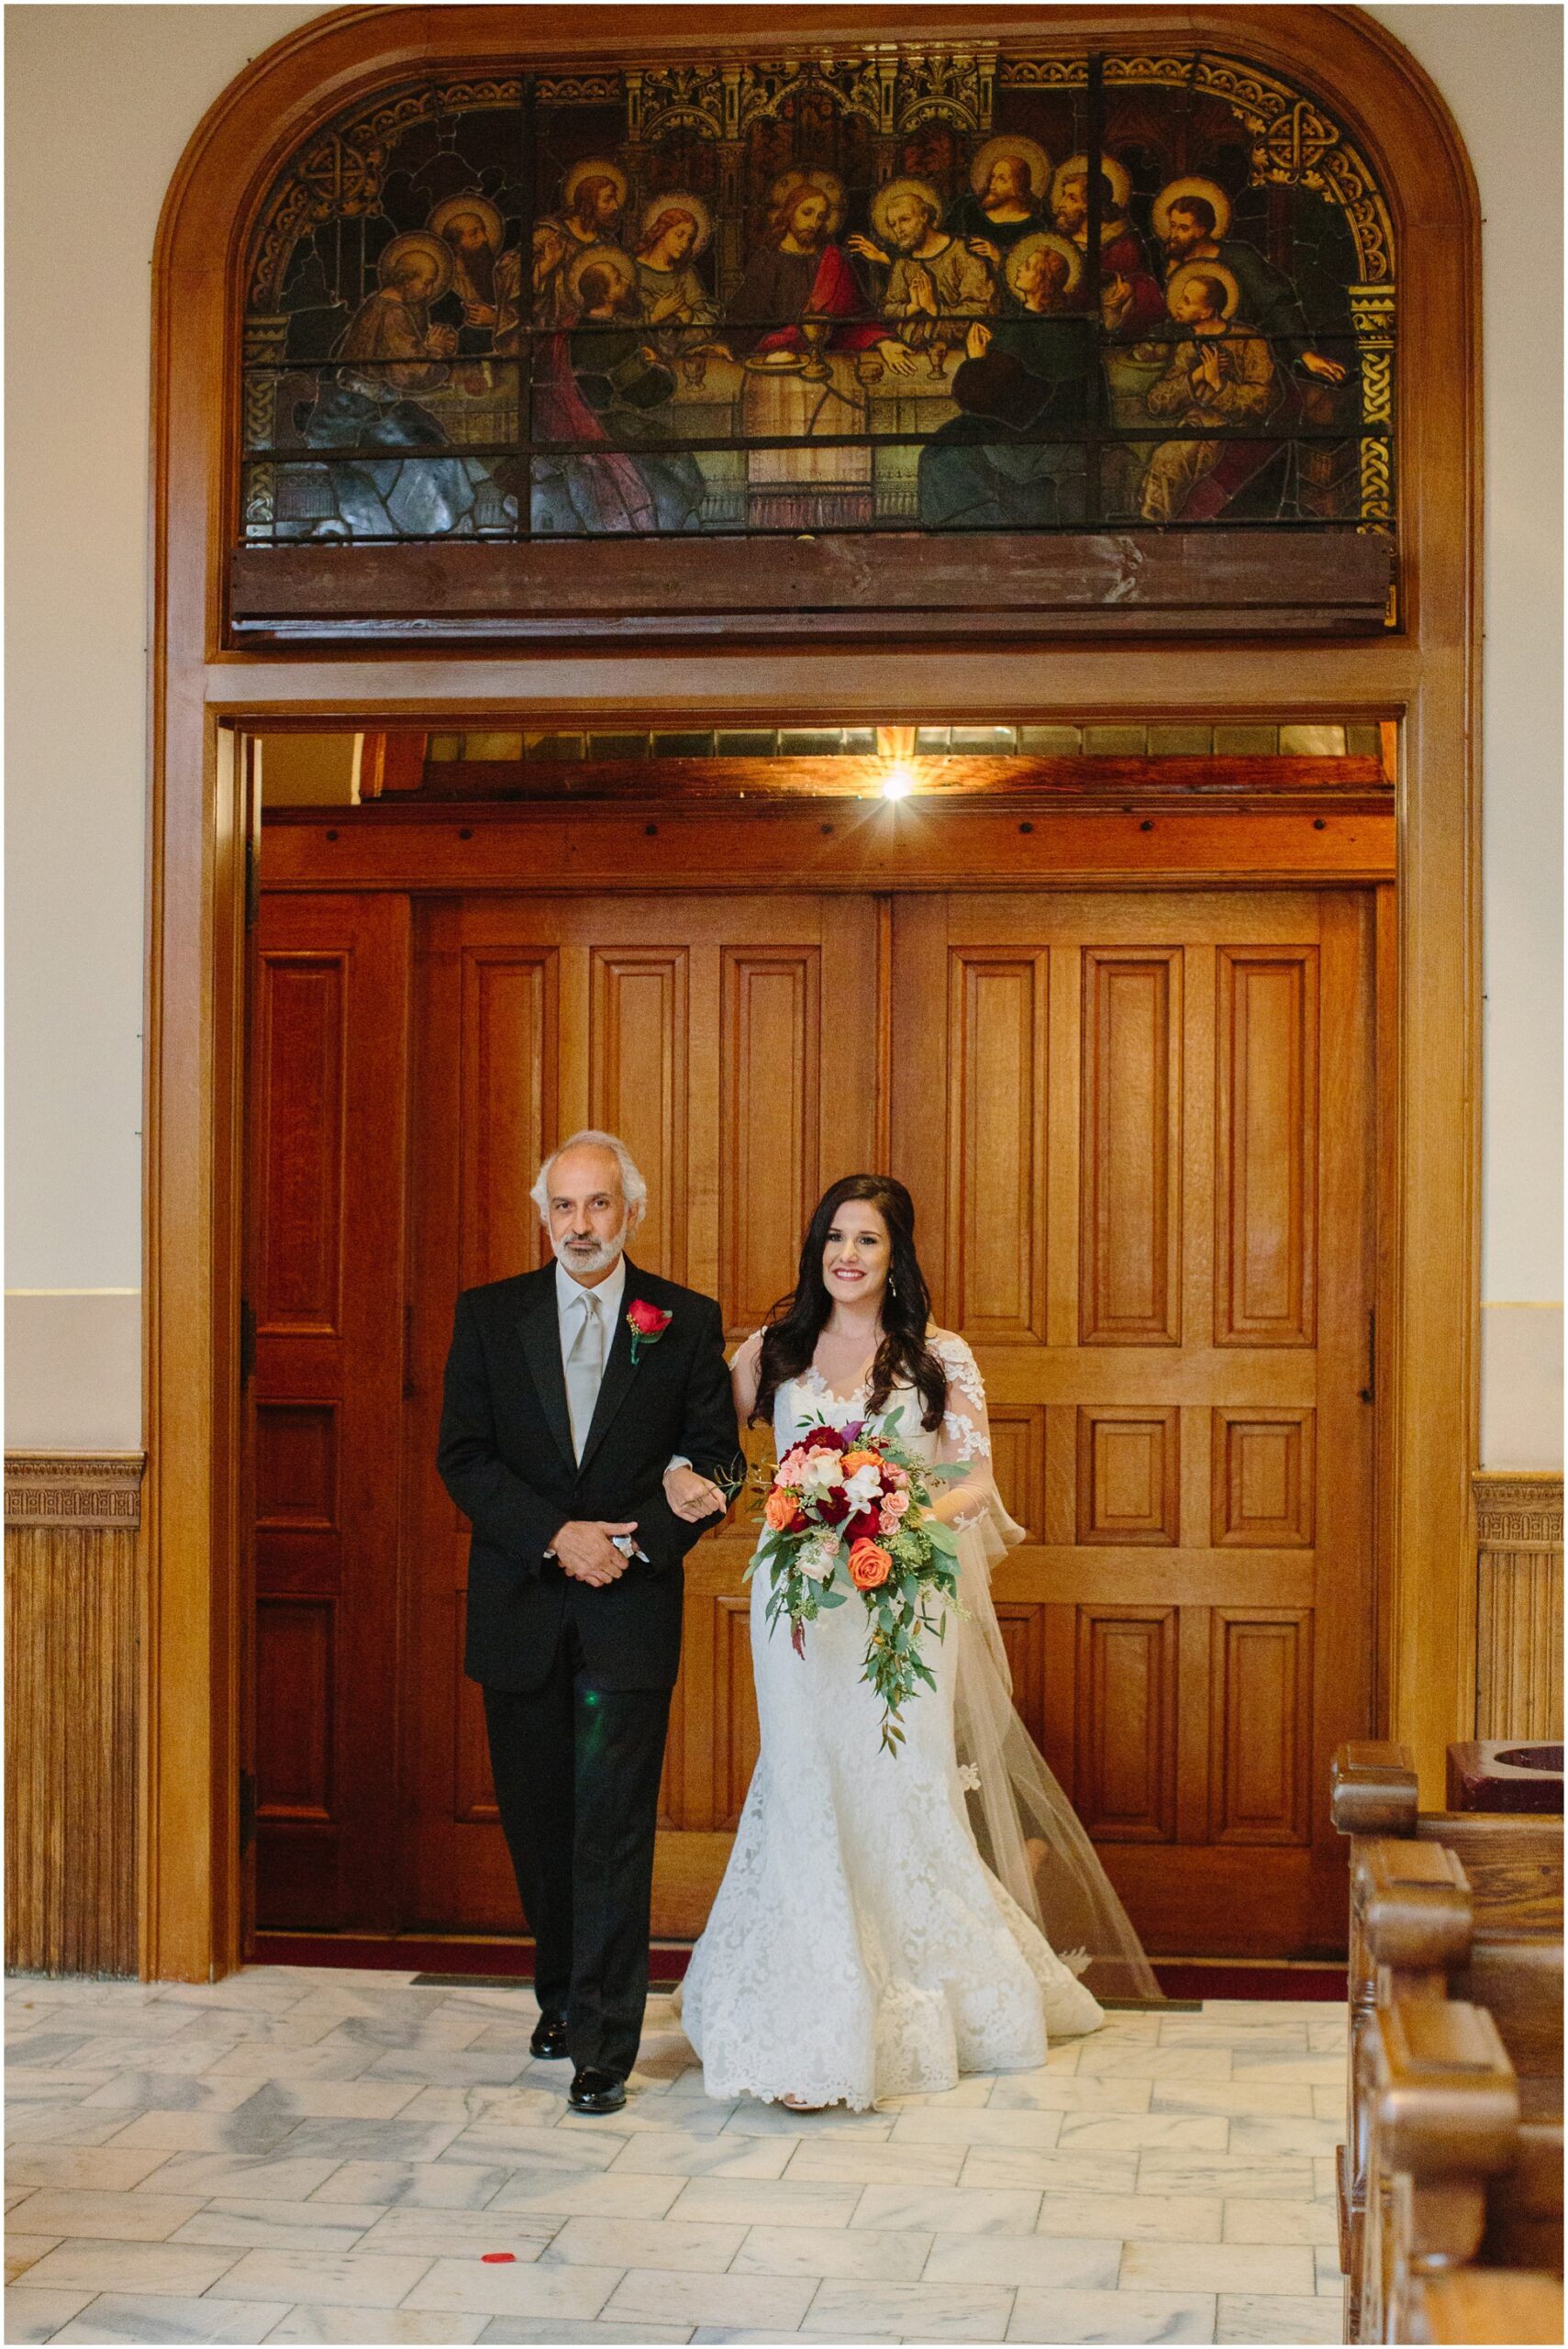 St. Joseph's Catholic Church and The Blacksmith Shop Wedding | Two Chics Photography | www.twochicsphotography.com